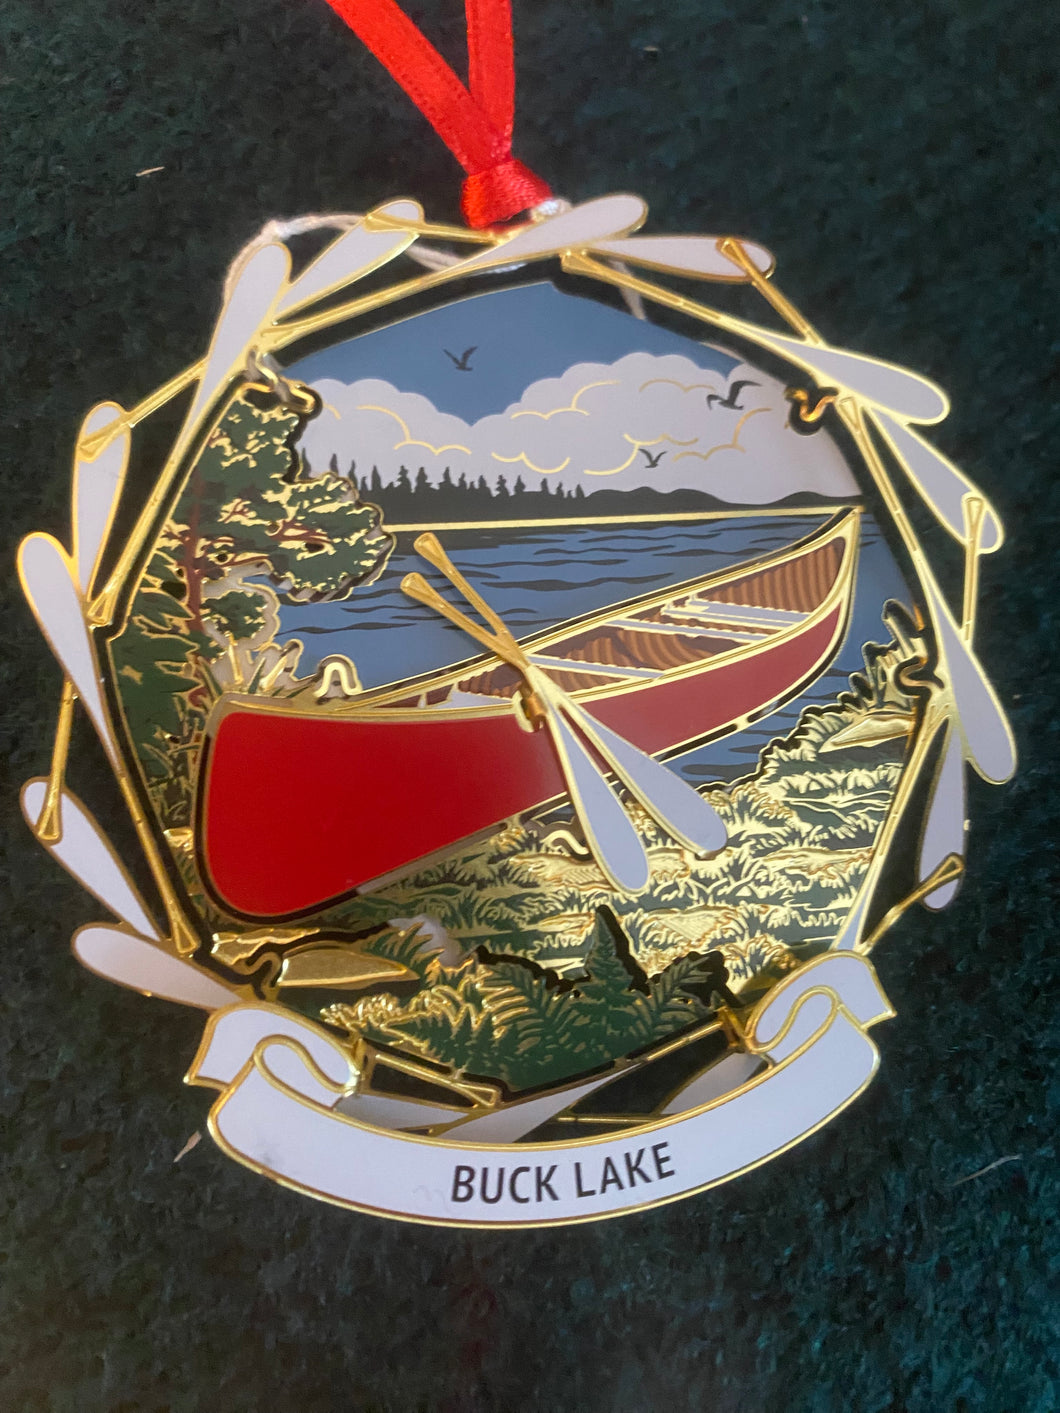 BUCK LAKE METAL CANOE ORNAMENT